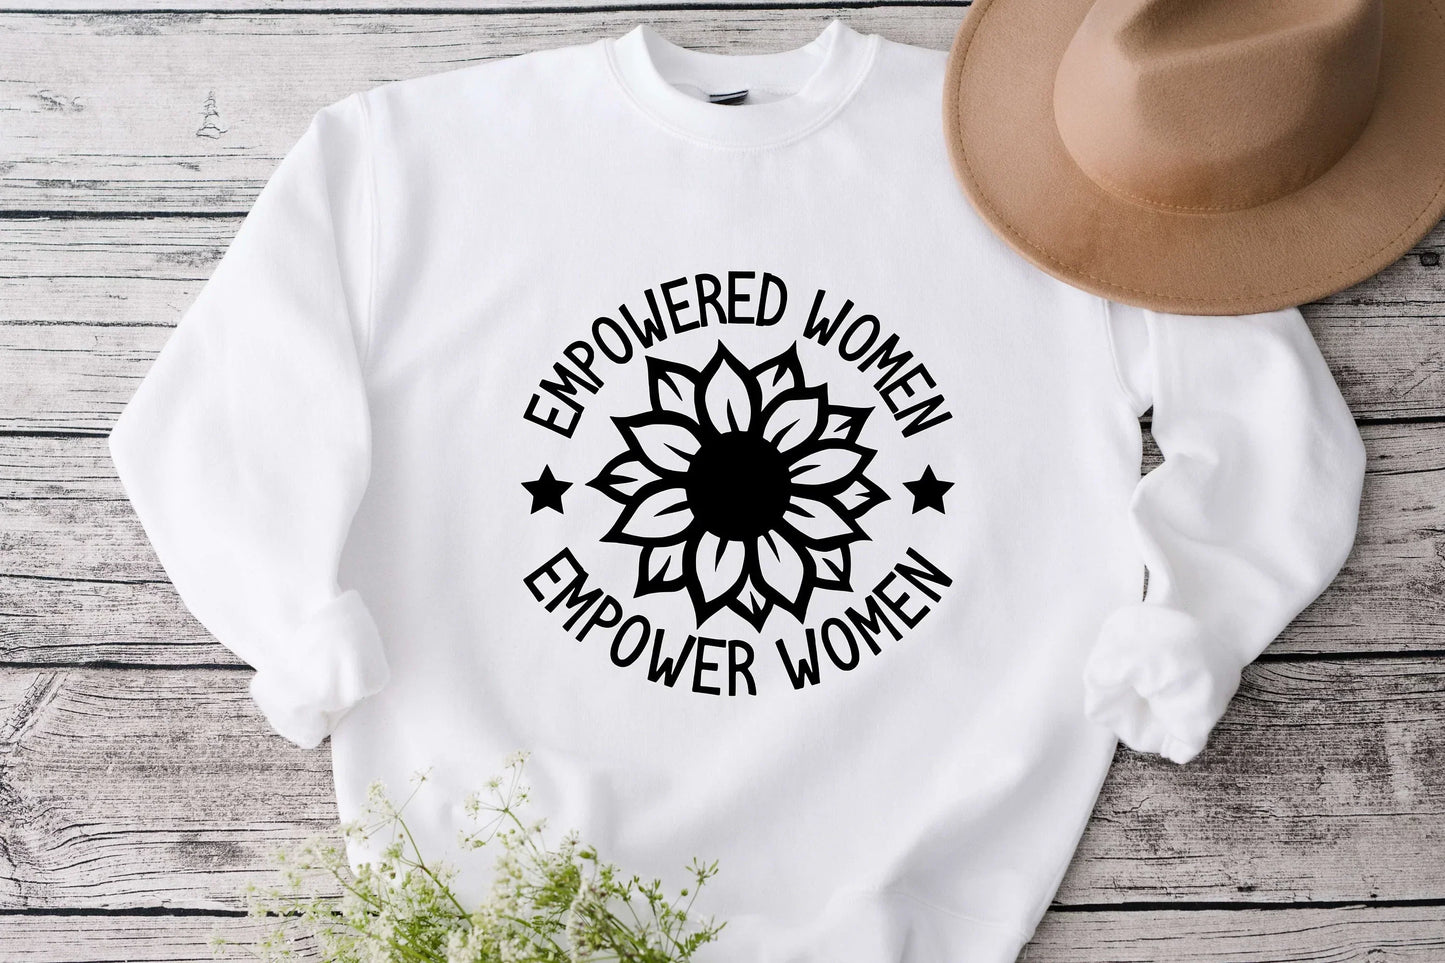 Empowered Women Empower Women T-Shirt | Prochoice Sweatshirt | Feminism | Equal Rights Hoodie | Women's Month Tshirt | Feminist Tops & Tees